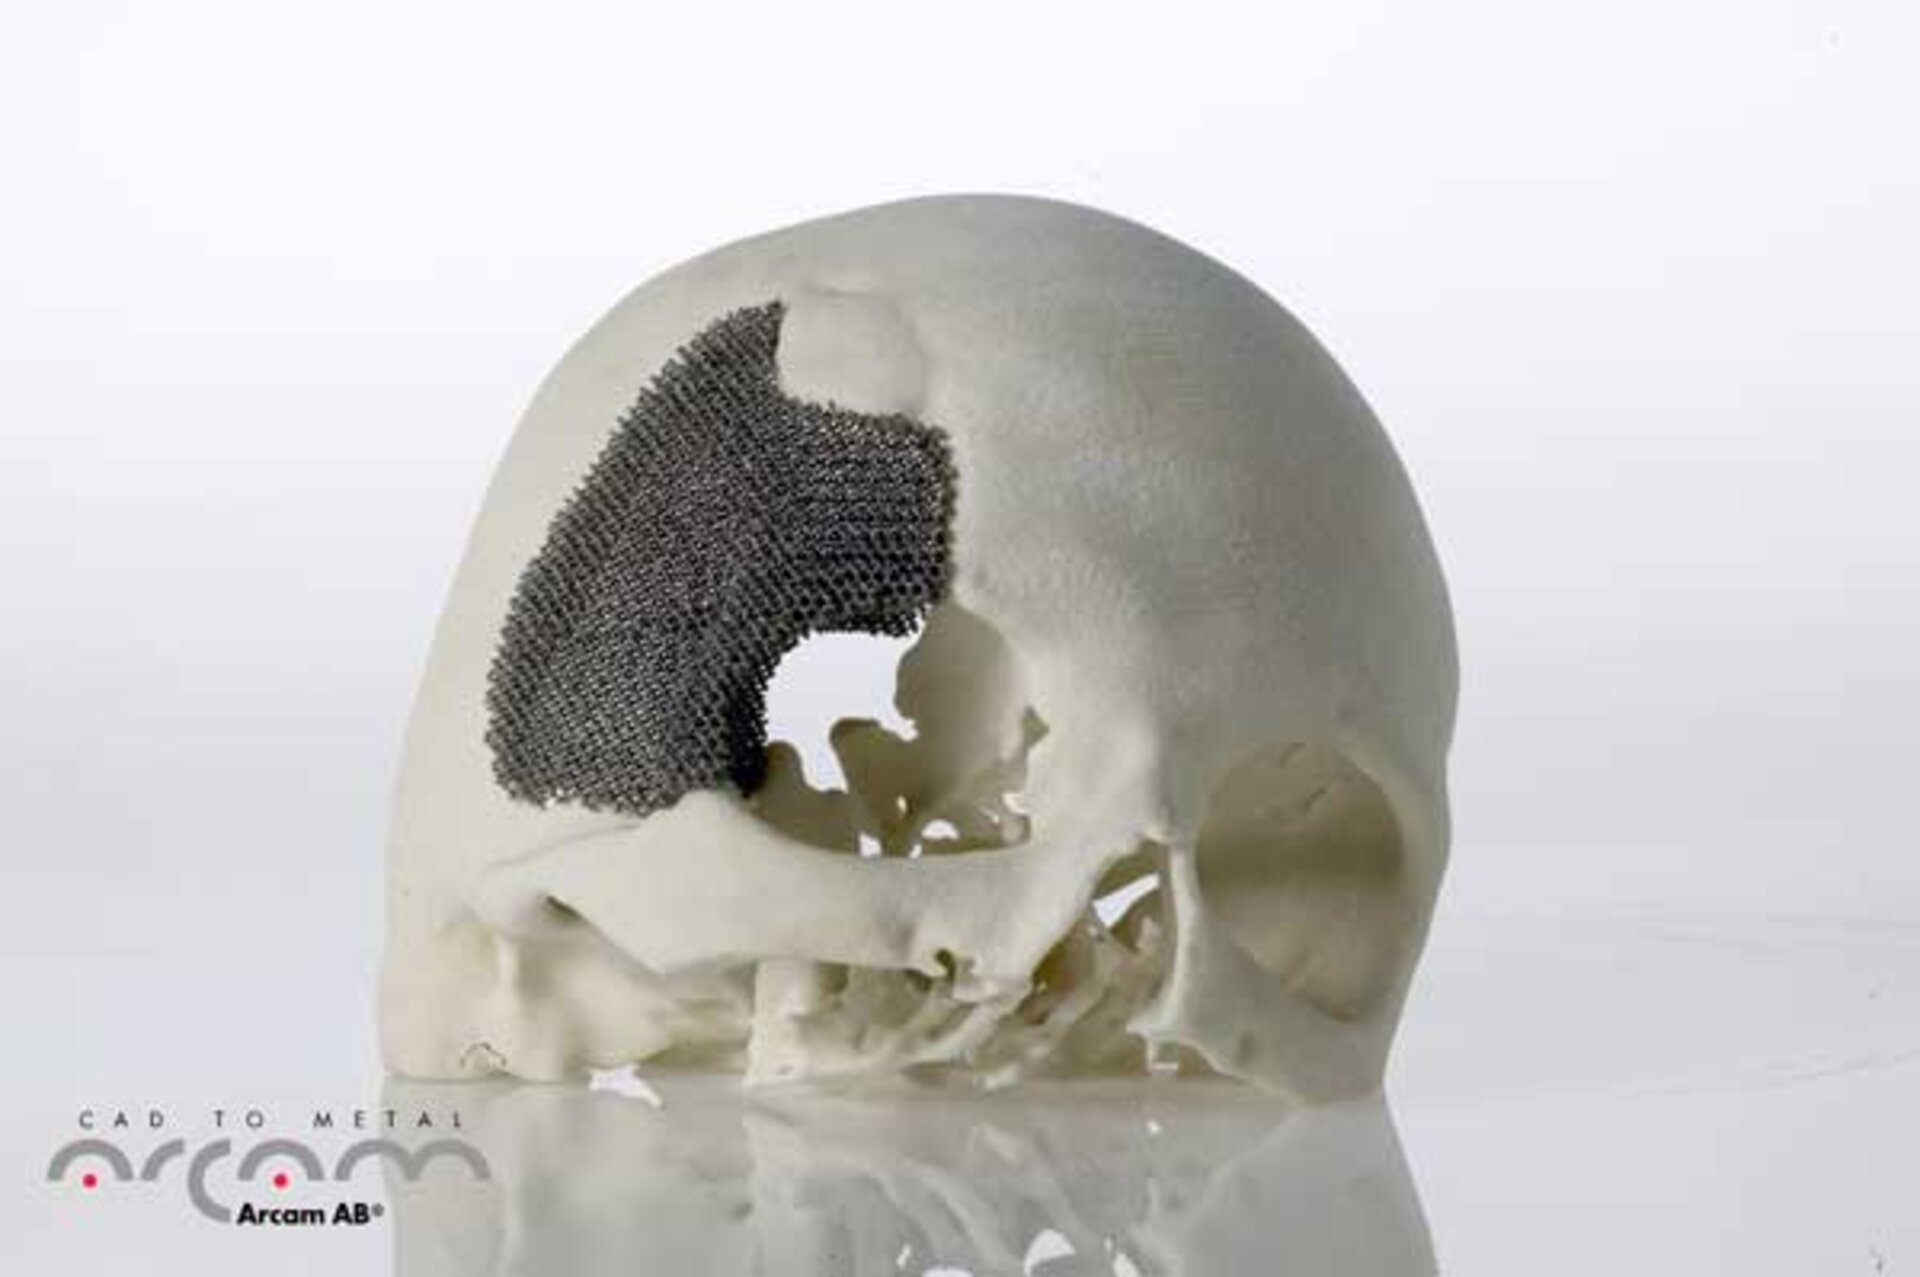 3D-printed skull implant